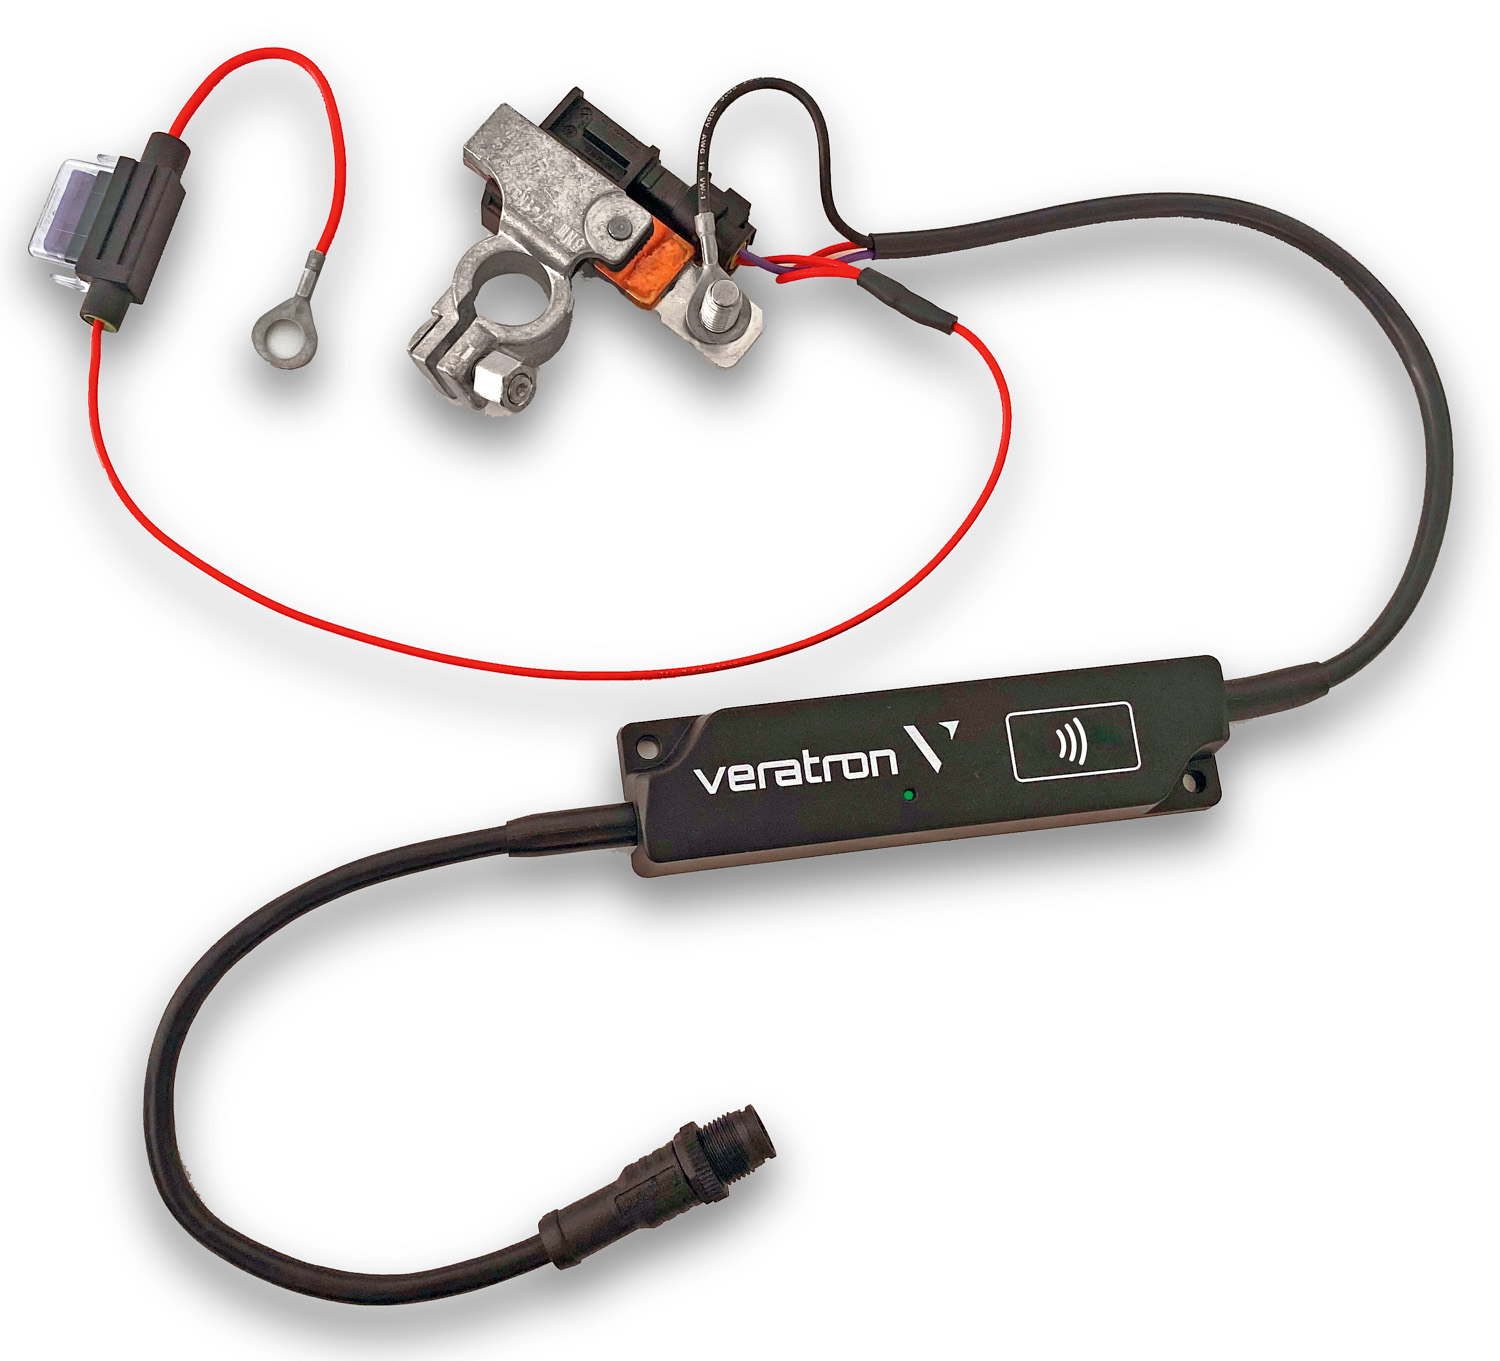 Equipment: Monitor battery charge status via smart shunt